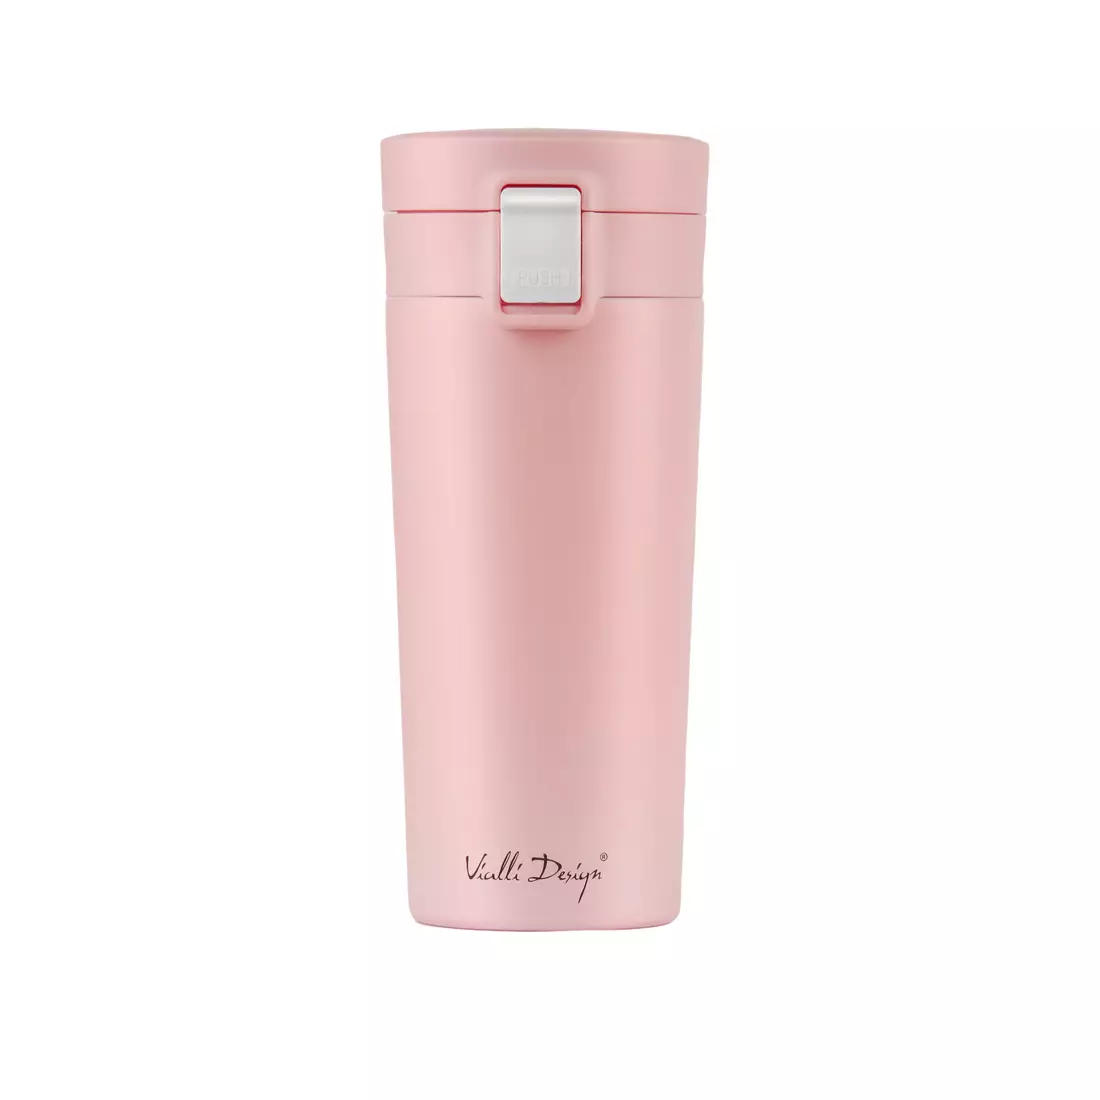 VIALLI DESIGN FUORI thermal mug 400 ml, pink